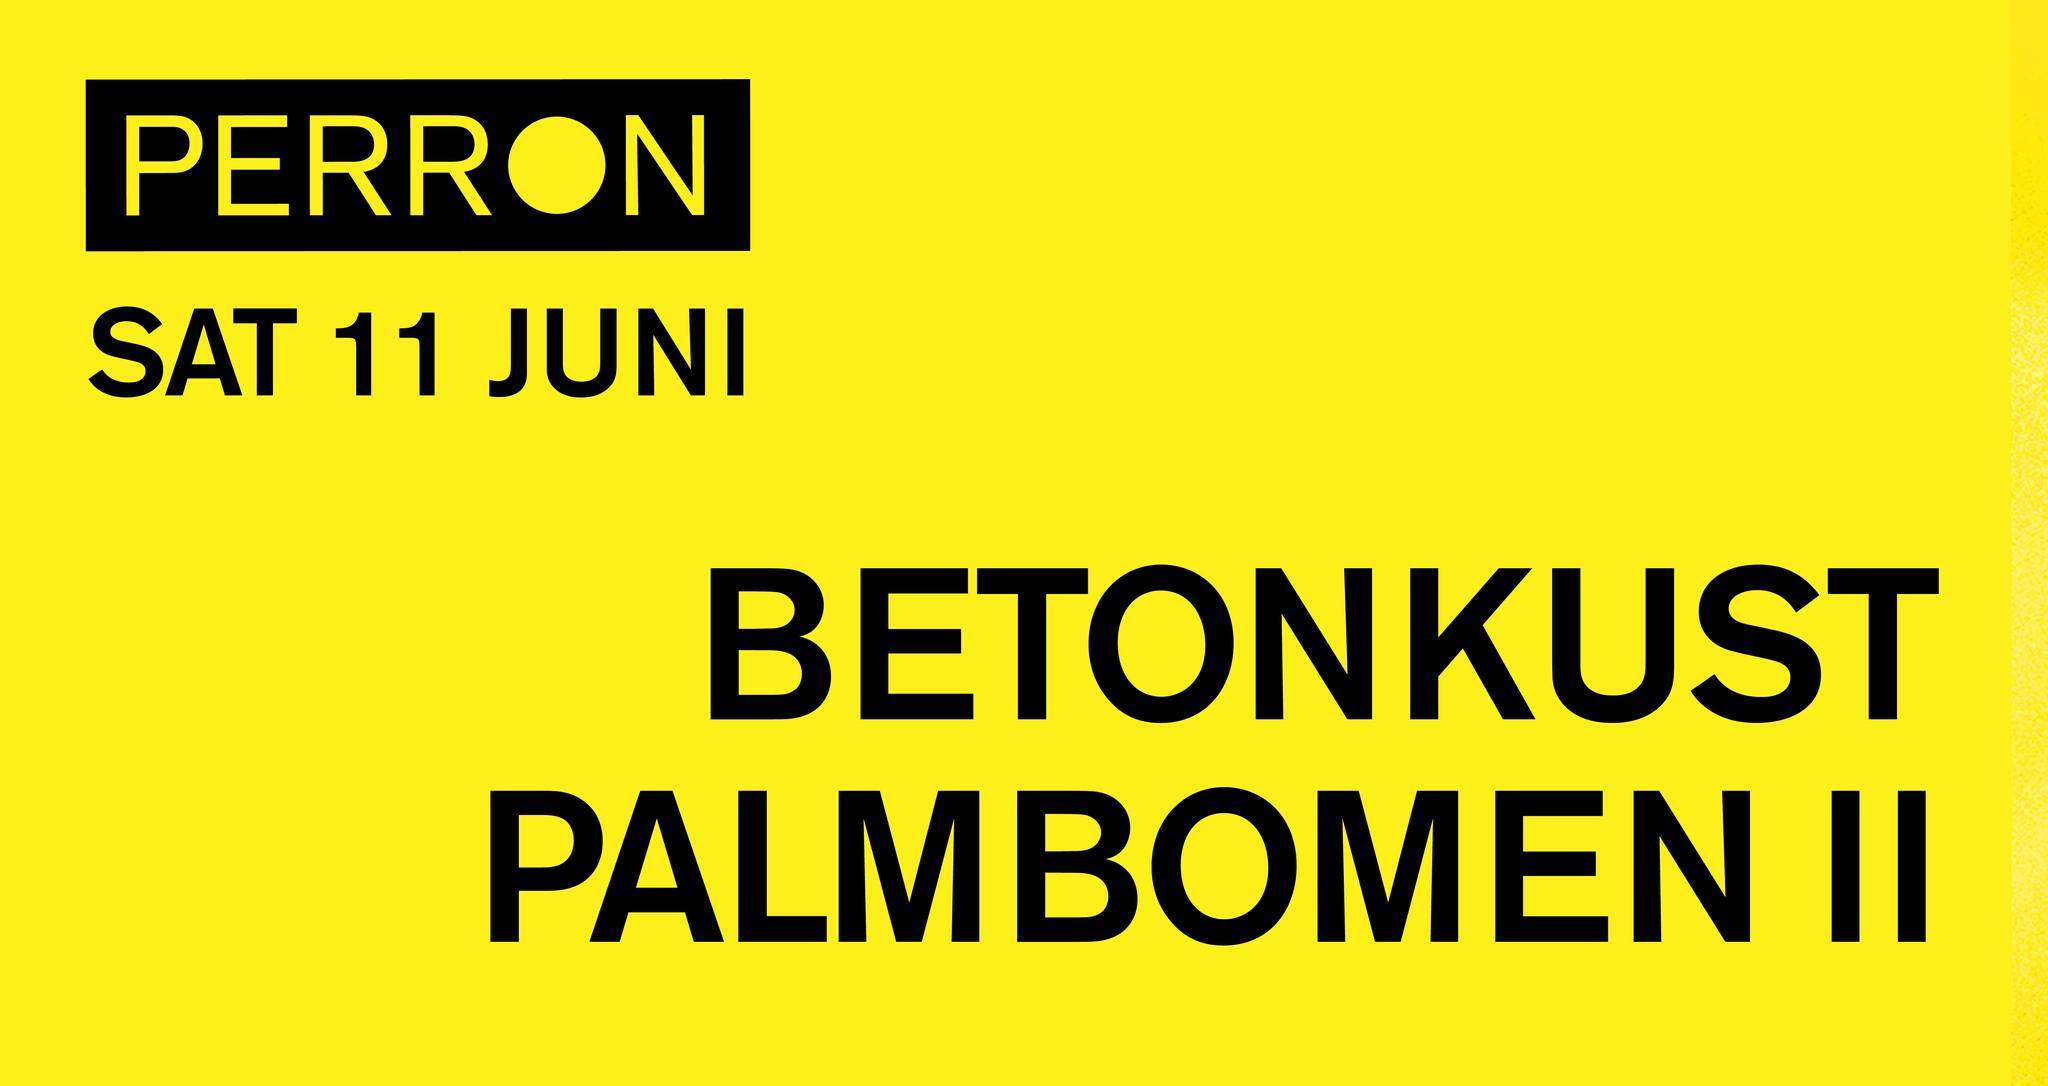 Betonkust, Palmbomen II - フライヤー表